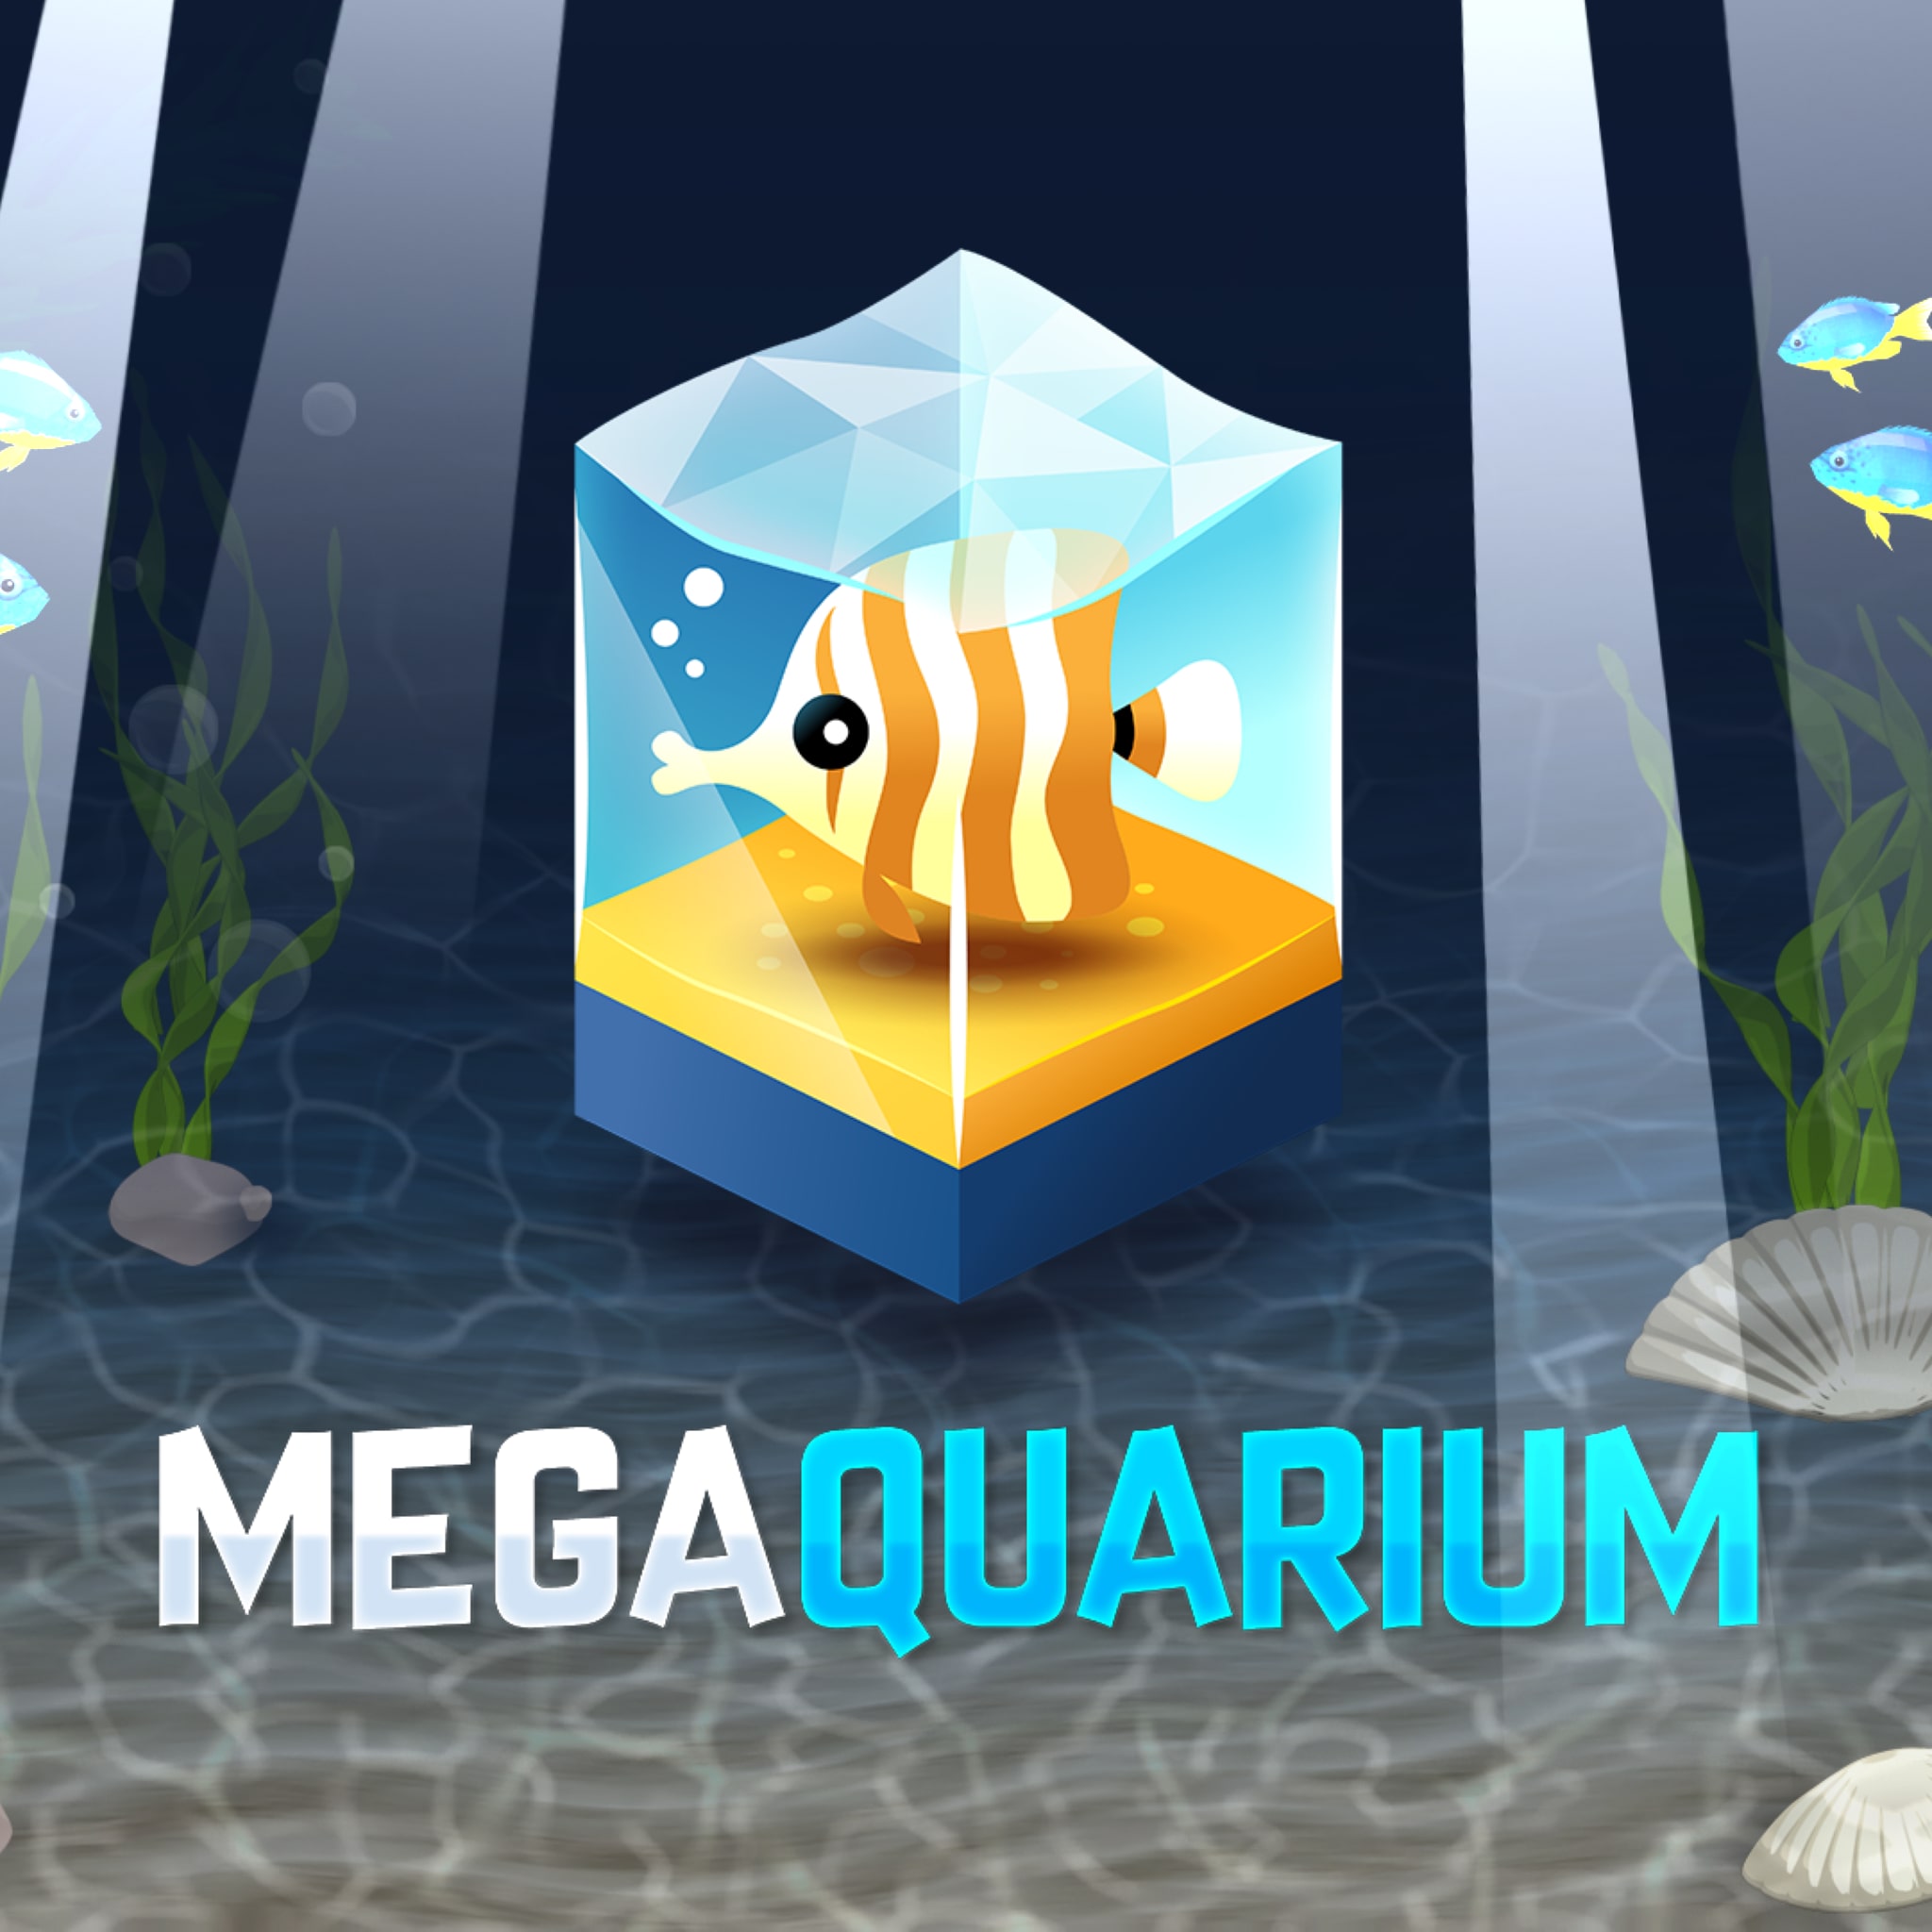 PlayStation on X: Build the perfect aquarium in Megaquarium, swimming to  PS4 October 18:  🐠  / X